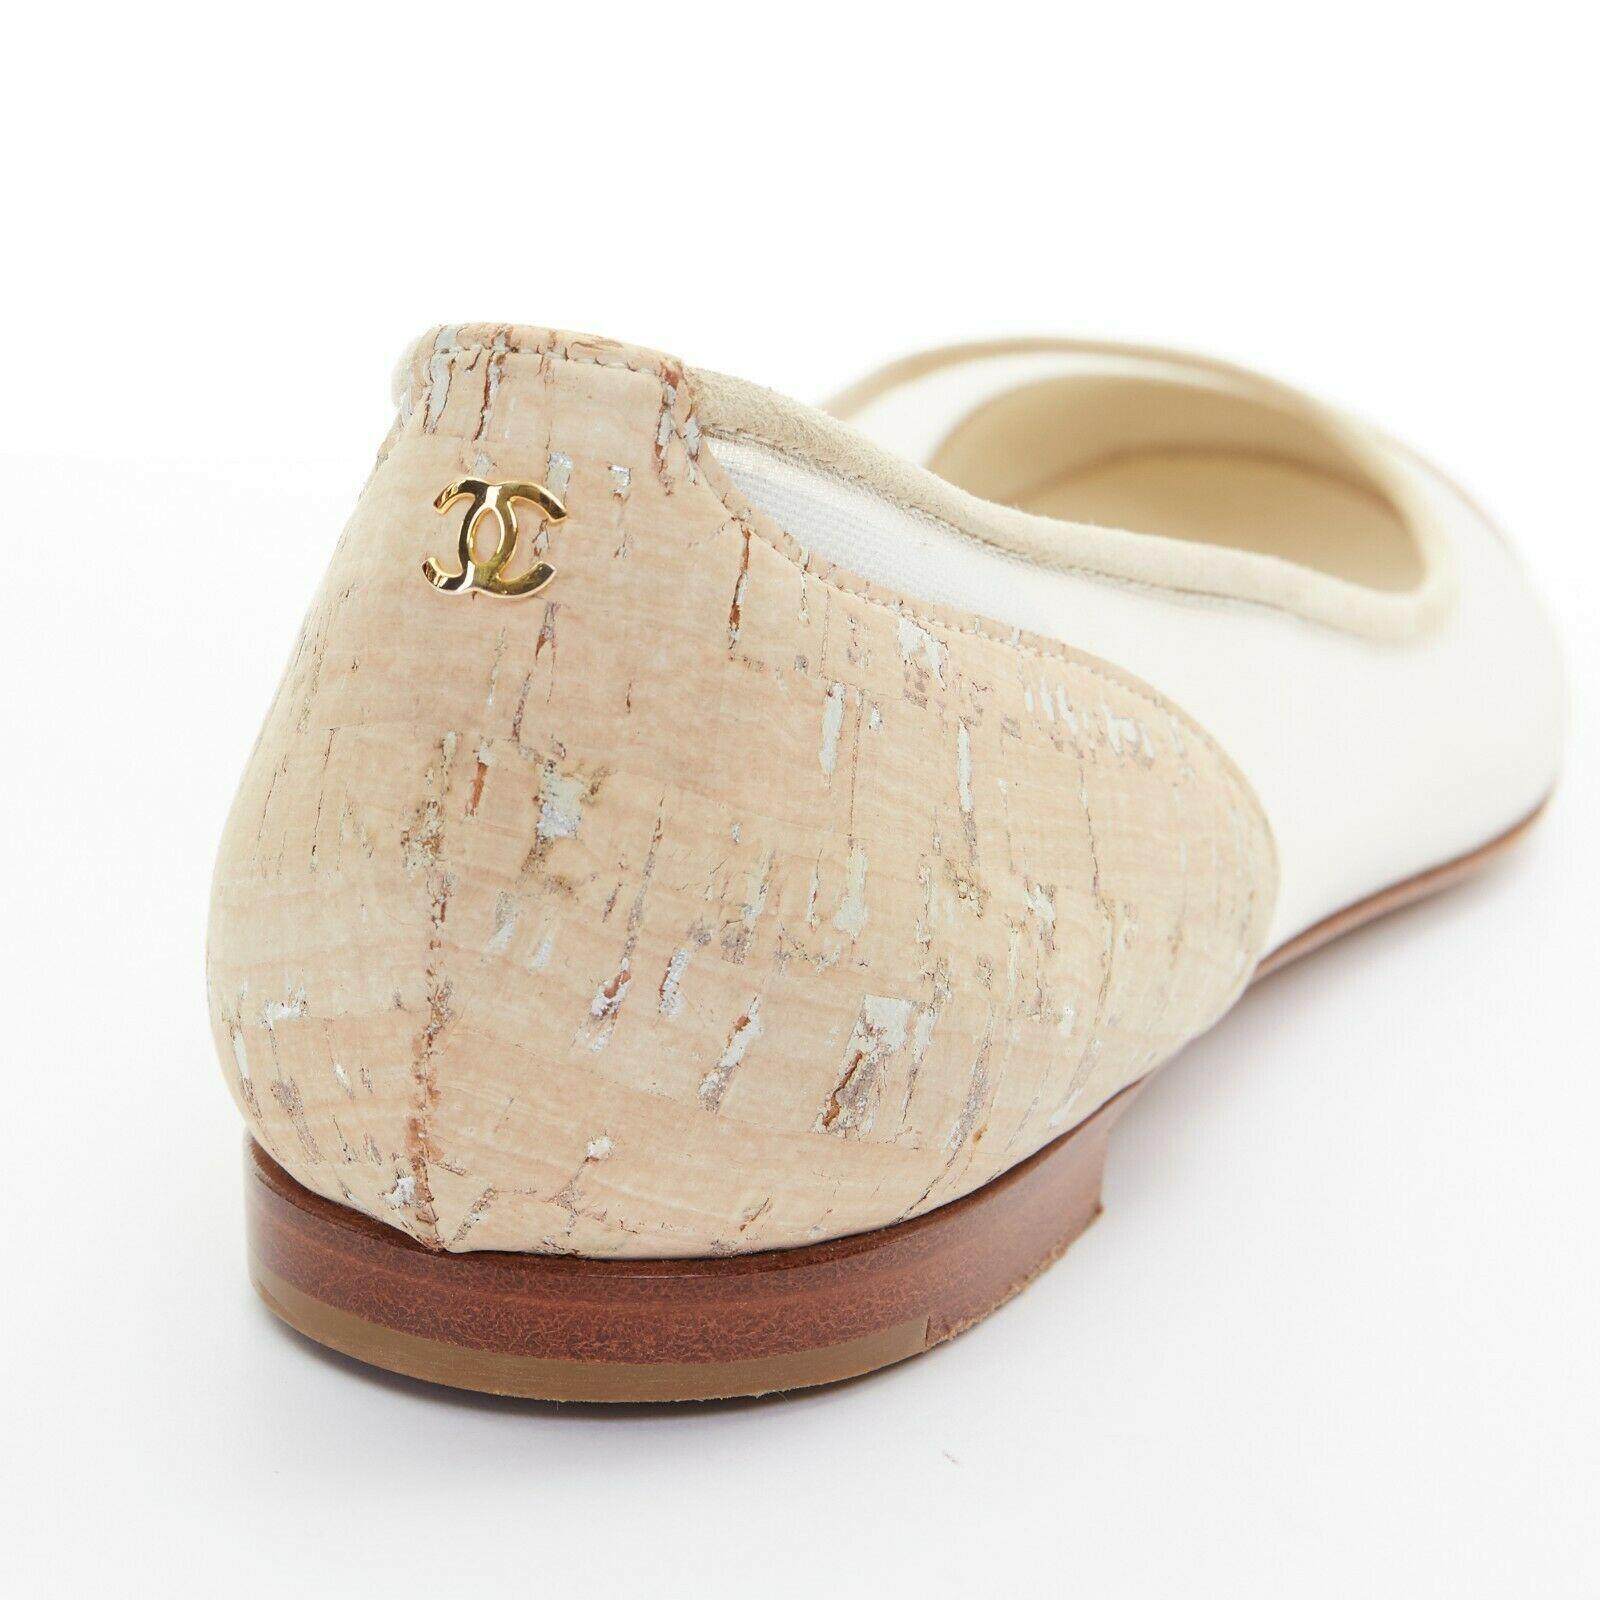 CHANEL white brown cork round toe cap CC logo flats shoes EU39 US9 UK6 4